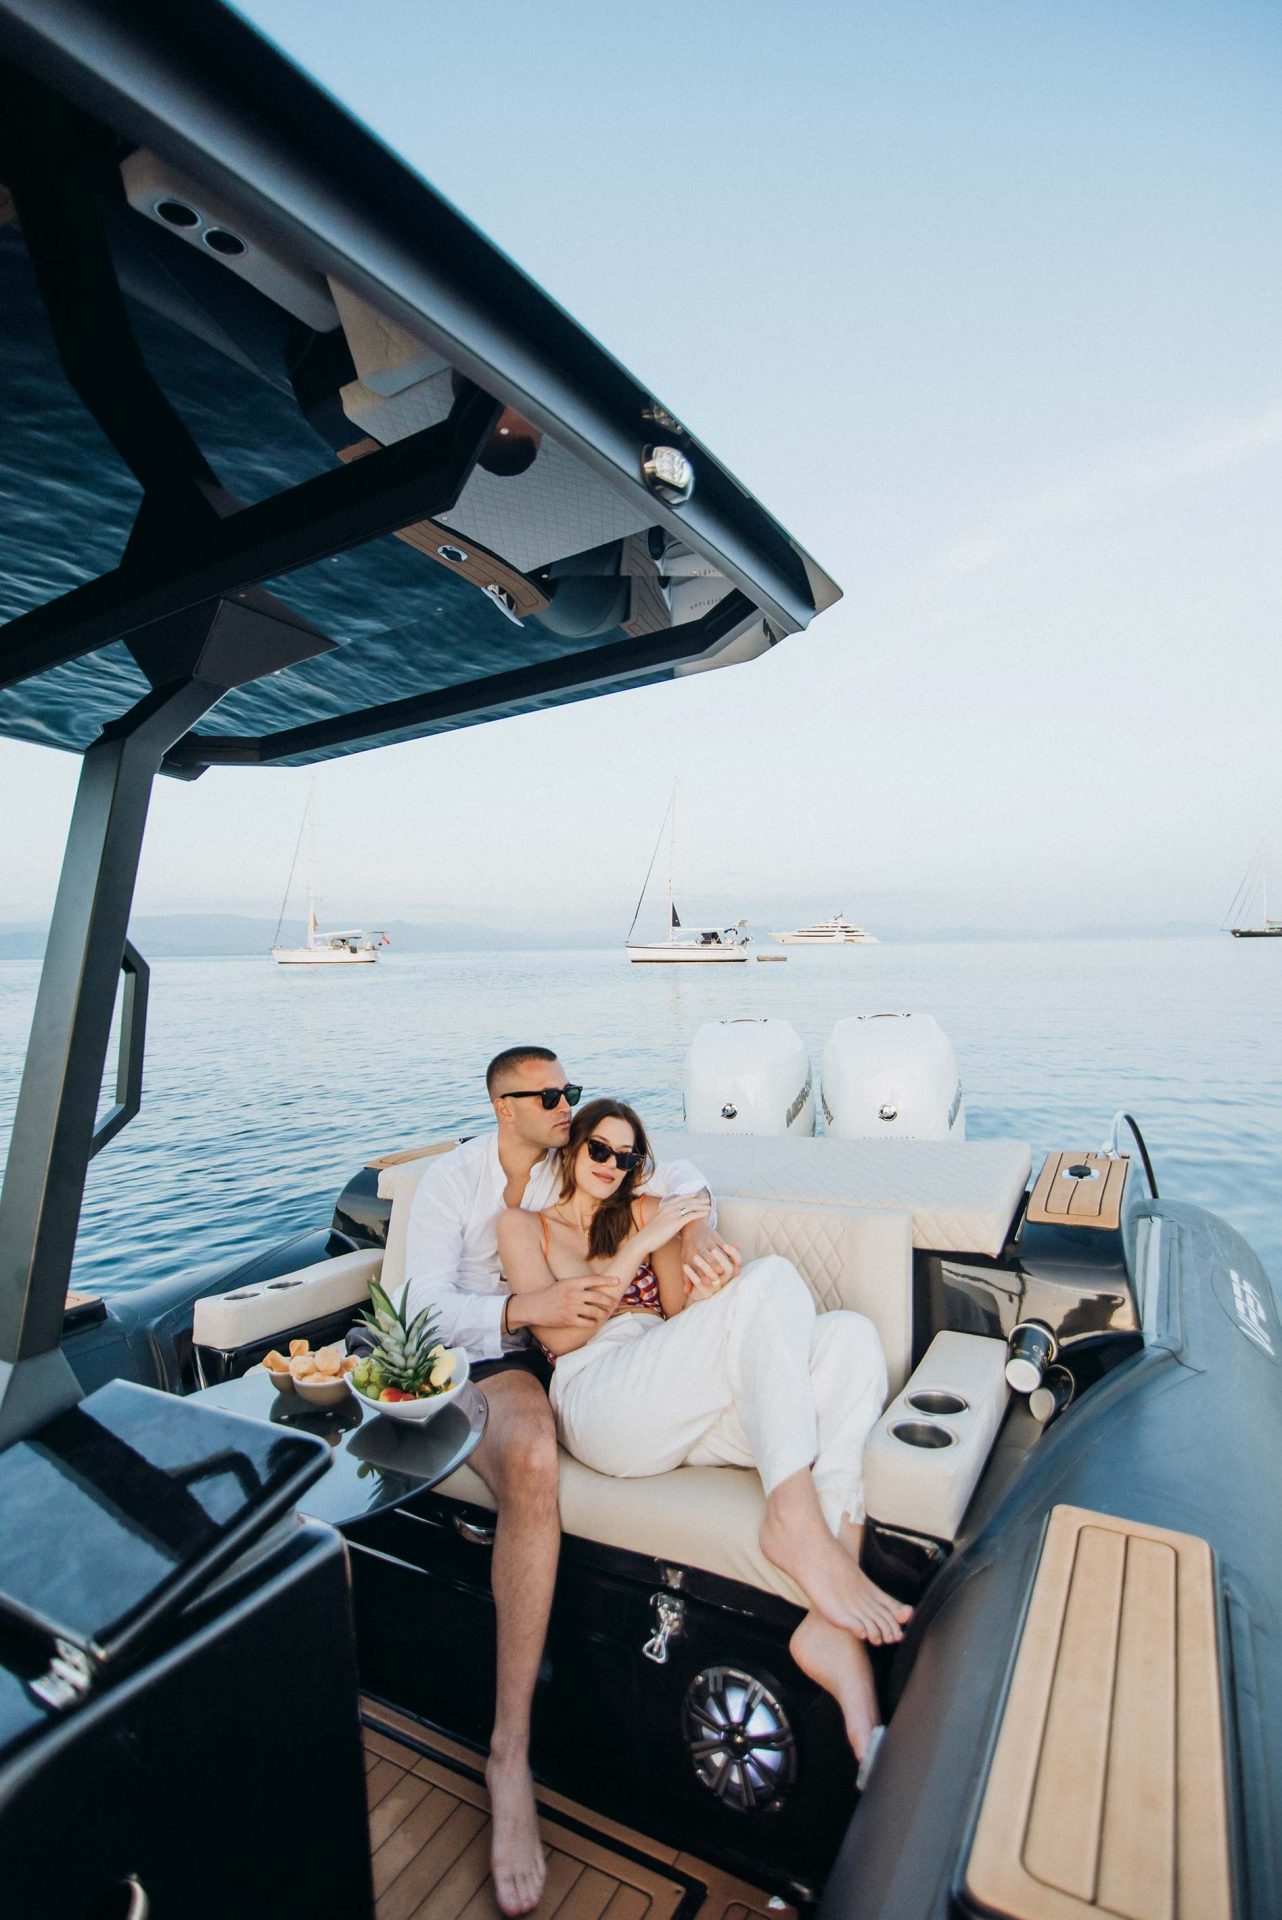 Romantic Sunset Experience in Corfu - Couple Enjoying Fresh Fruit on a Boat Trip